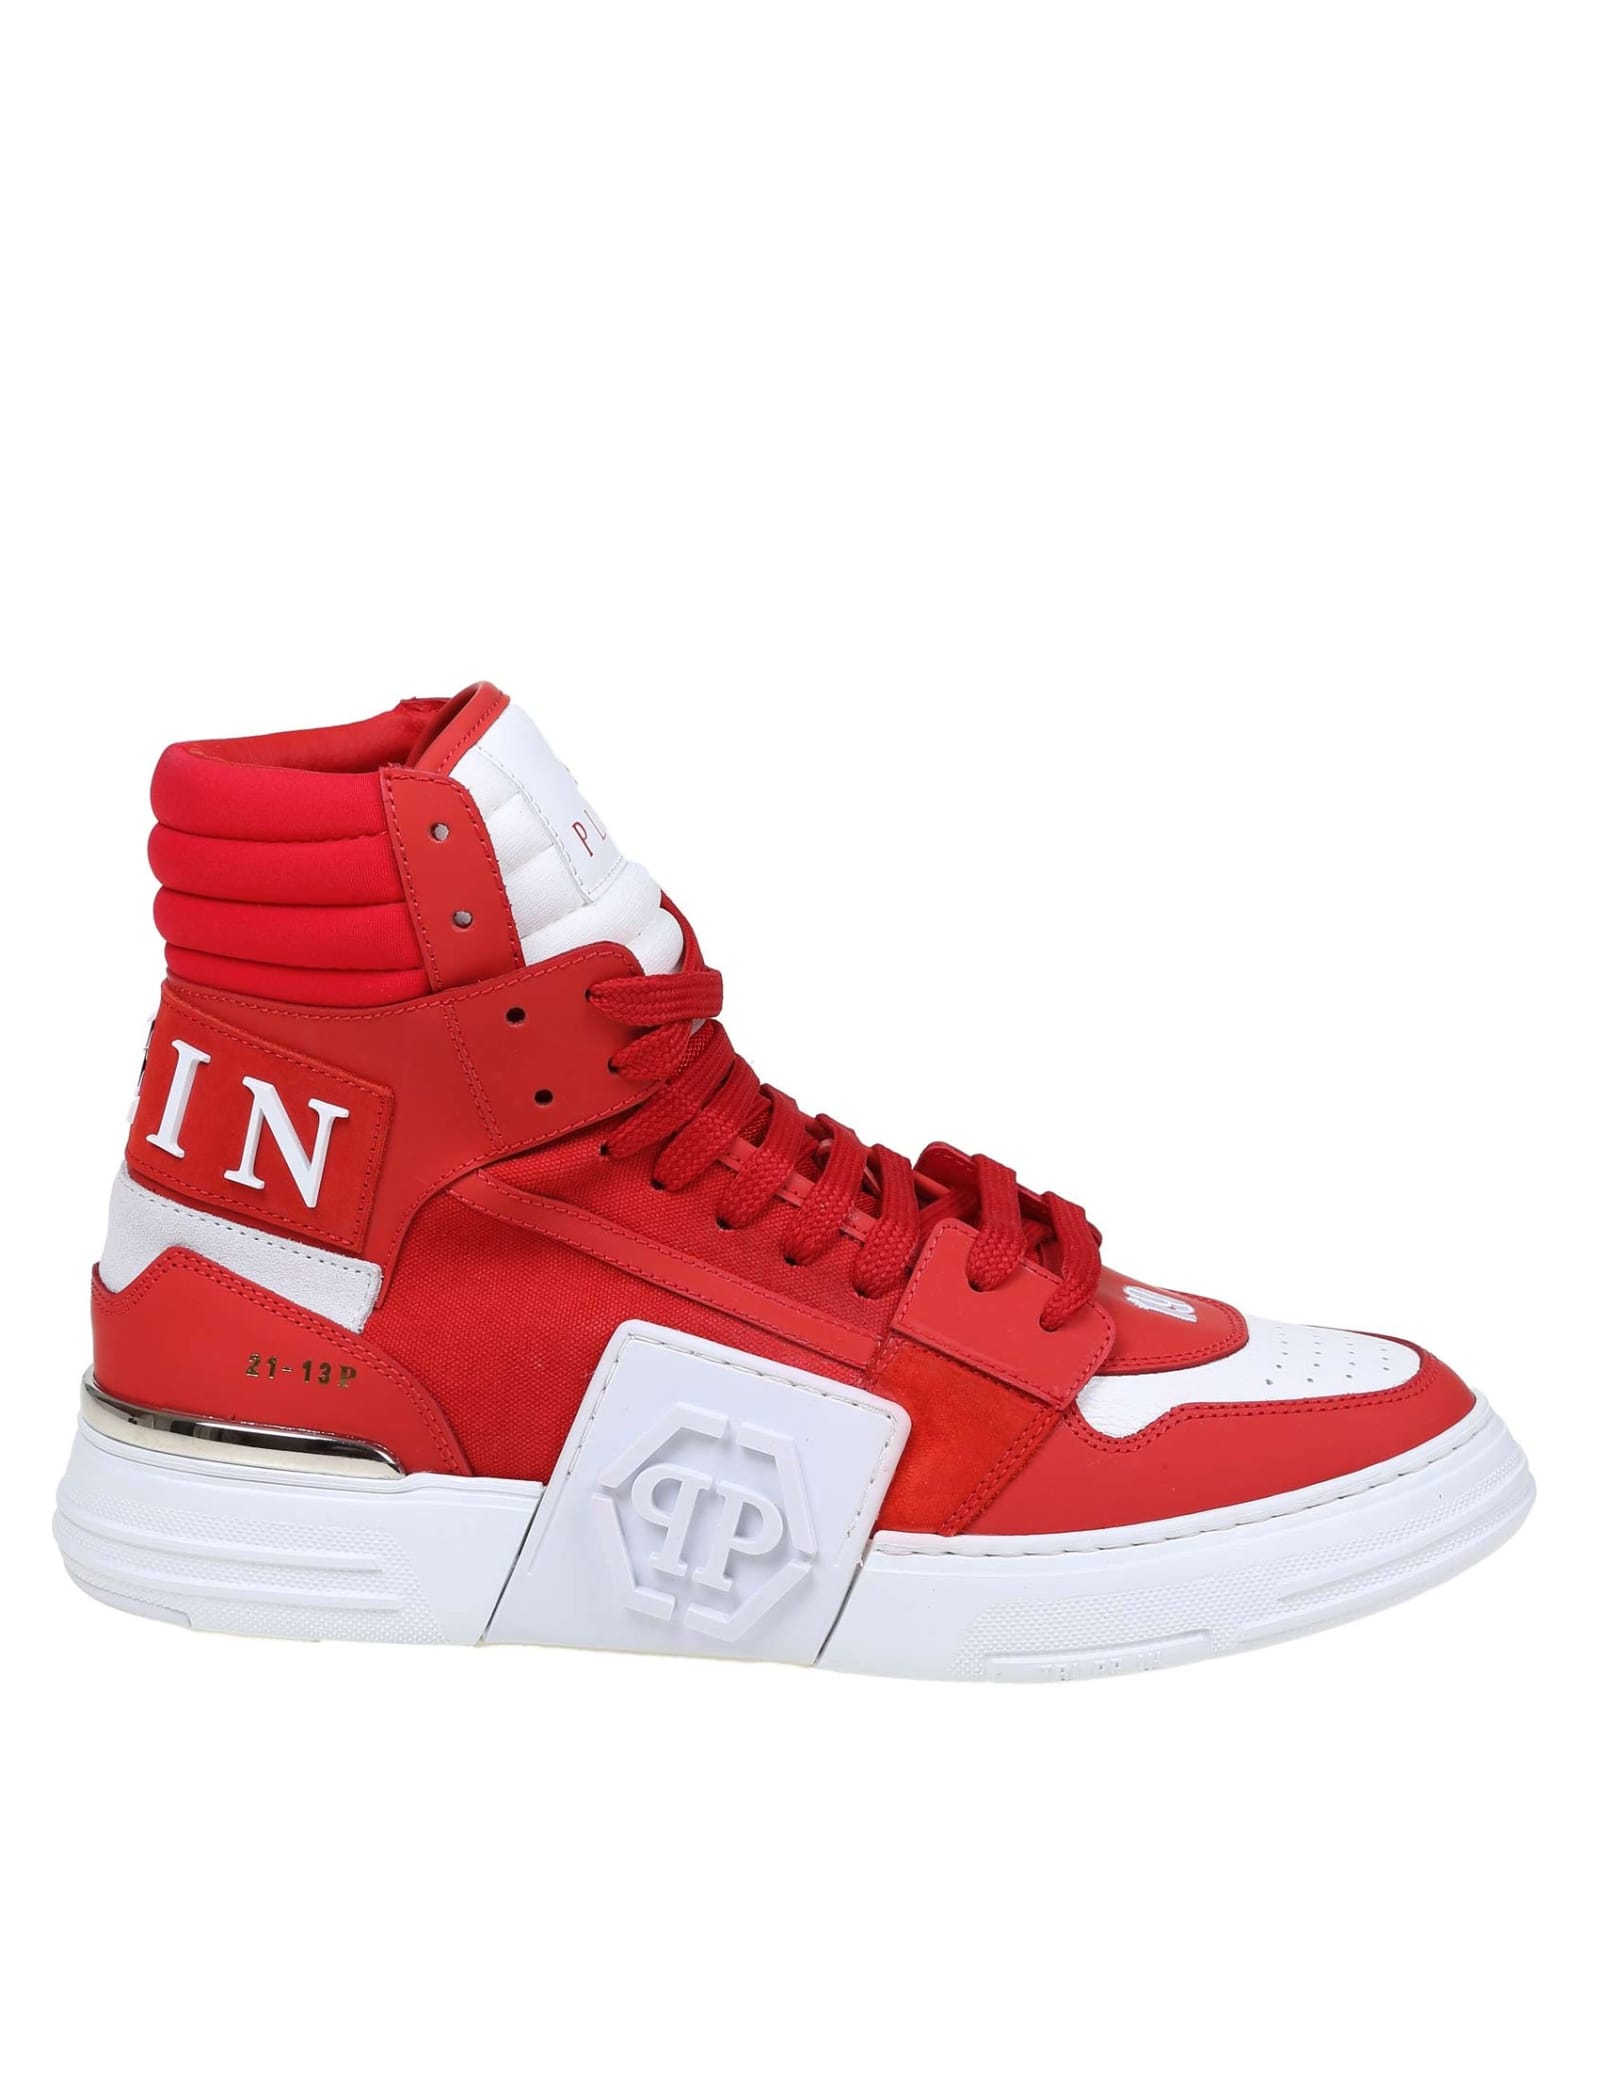 Philipp Plein Sneaker Phantom Kick $ Hi-top Color Red And White